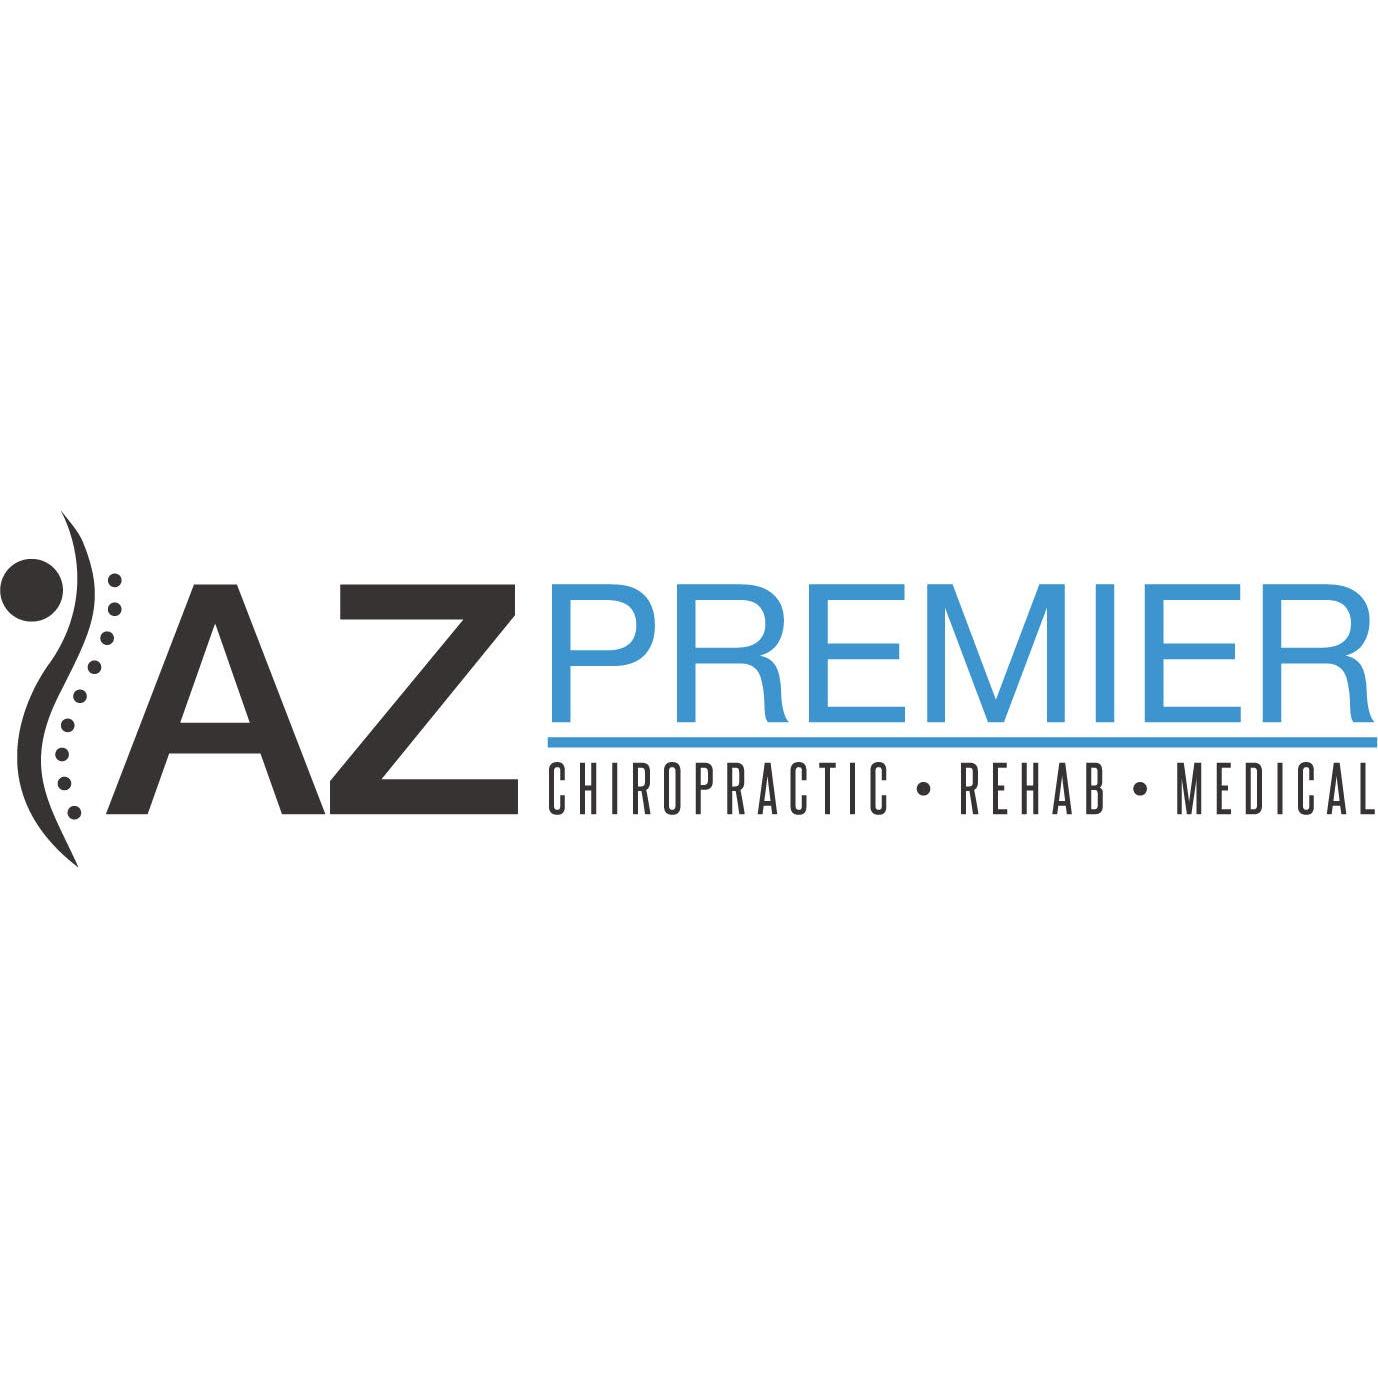 AZ Premier Chiropractic and Rehab